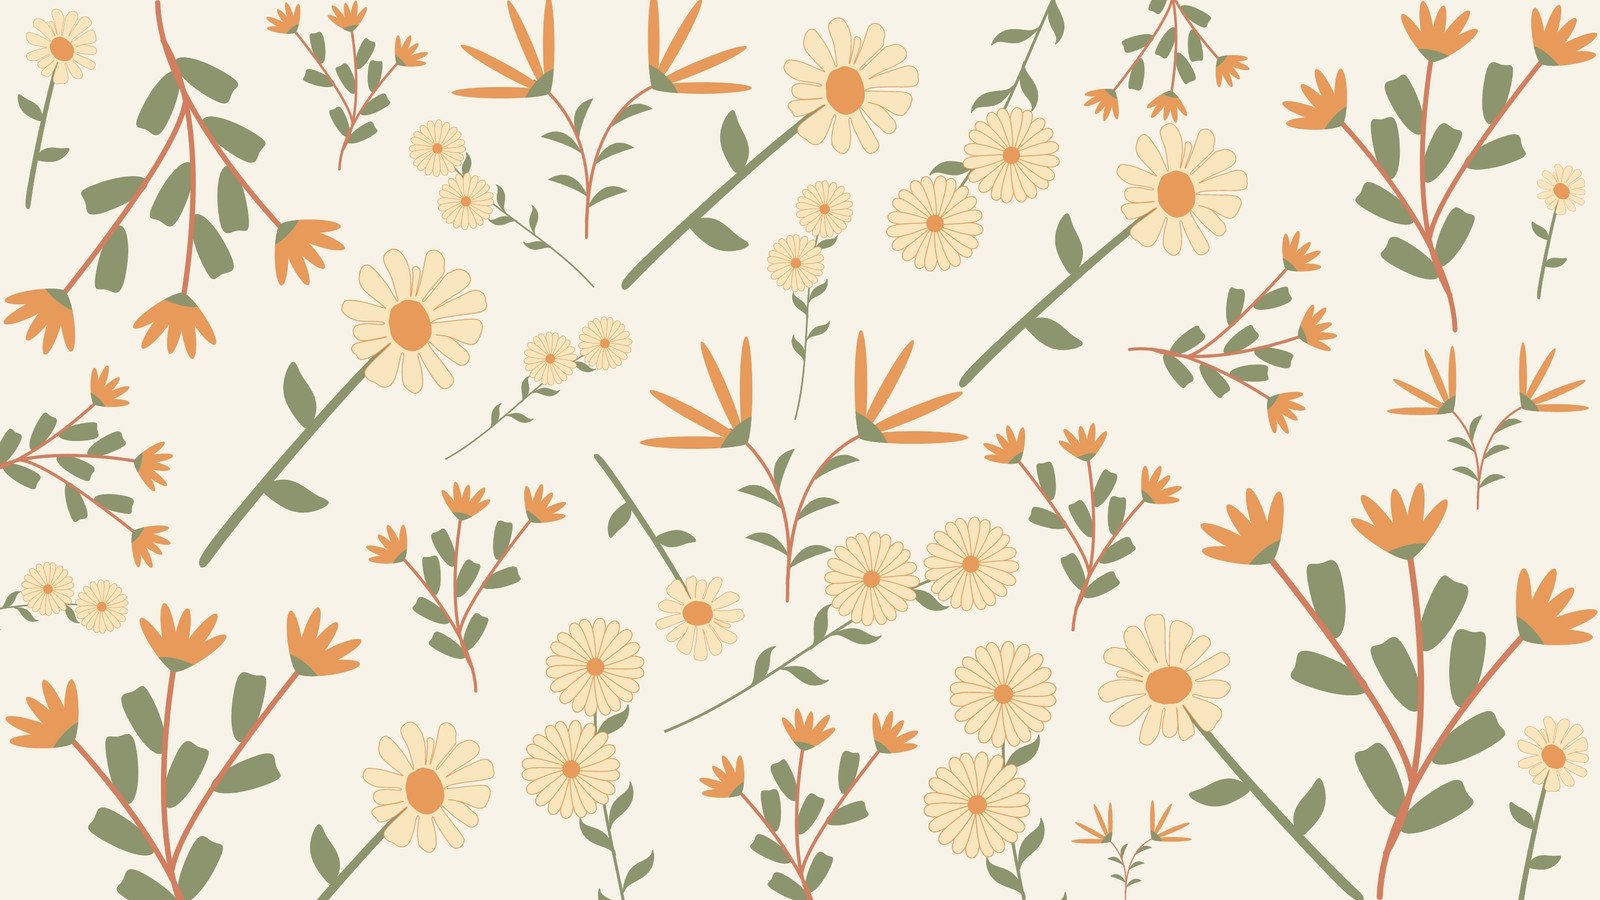 Free and customizable floral desktop wallpaper templates | Canva